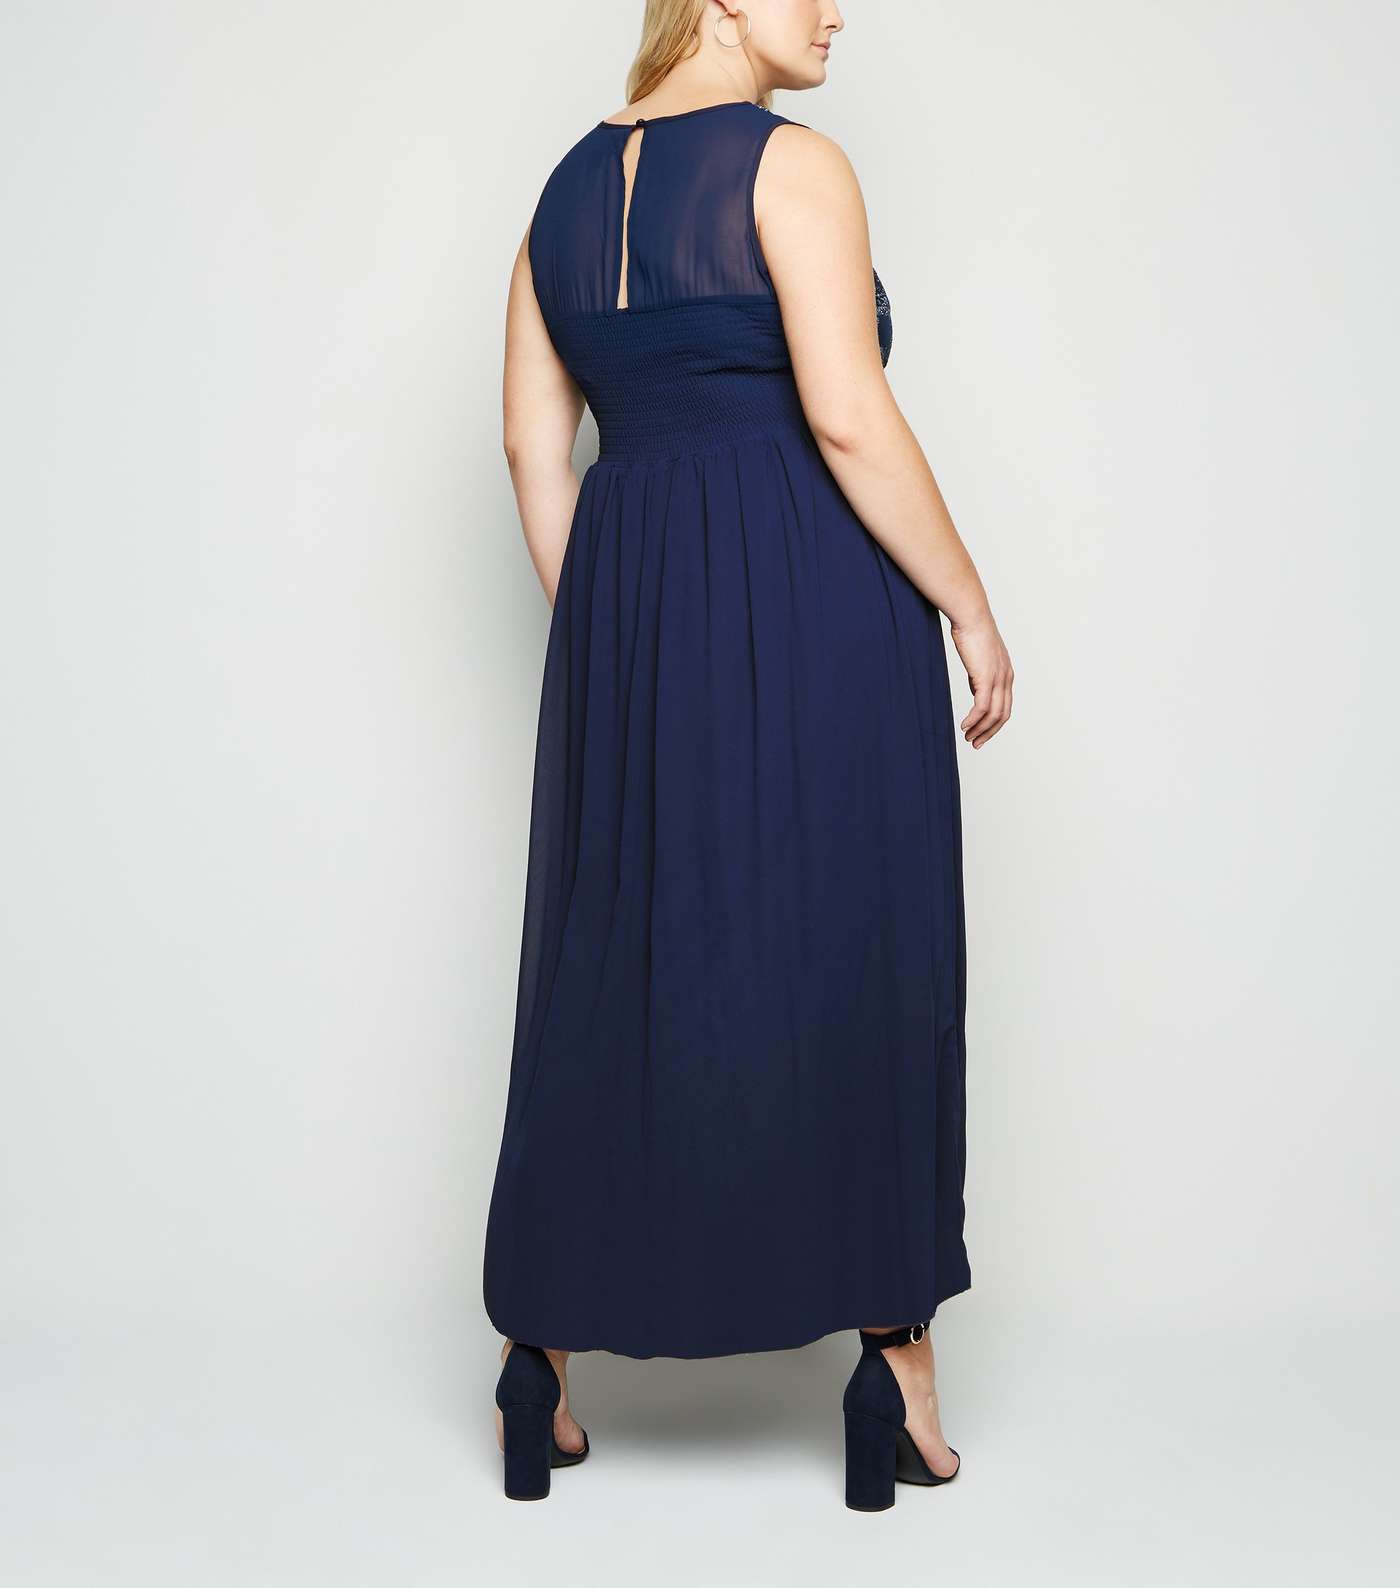 Mela Curves Navy Sequin Chiffon Maxi Dress Image 2